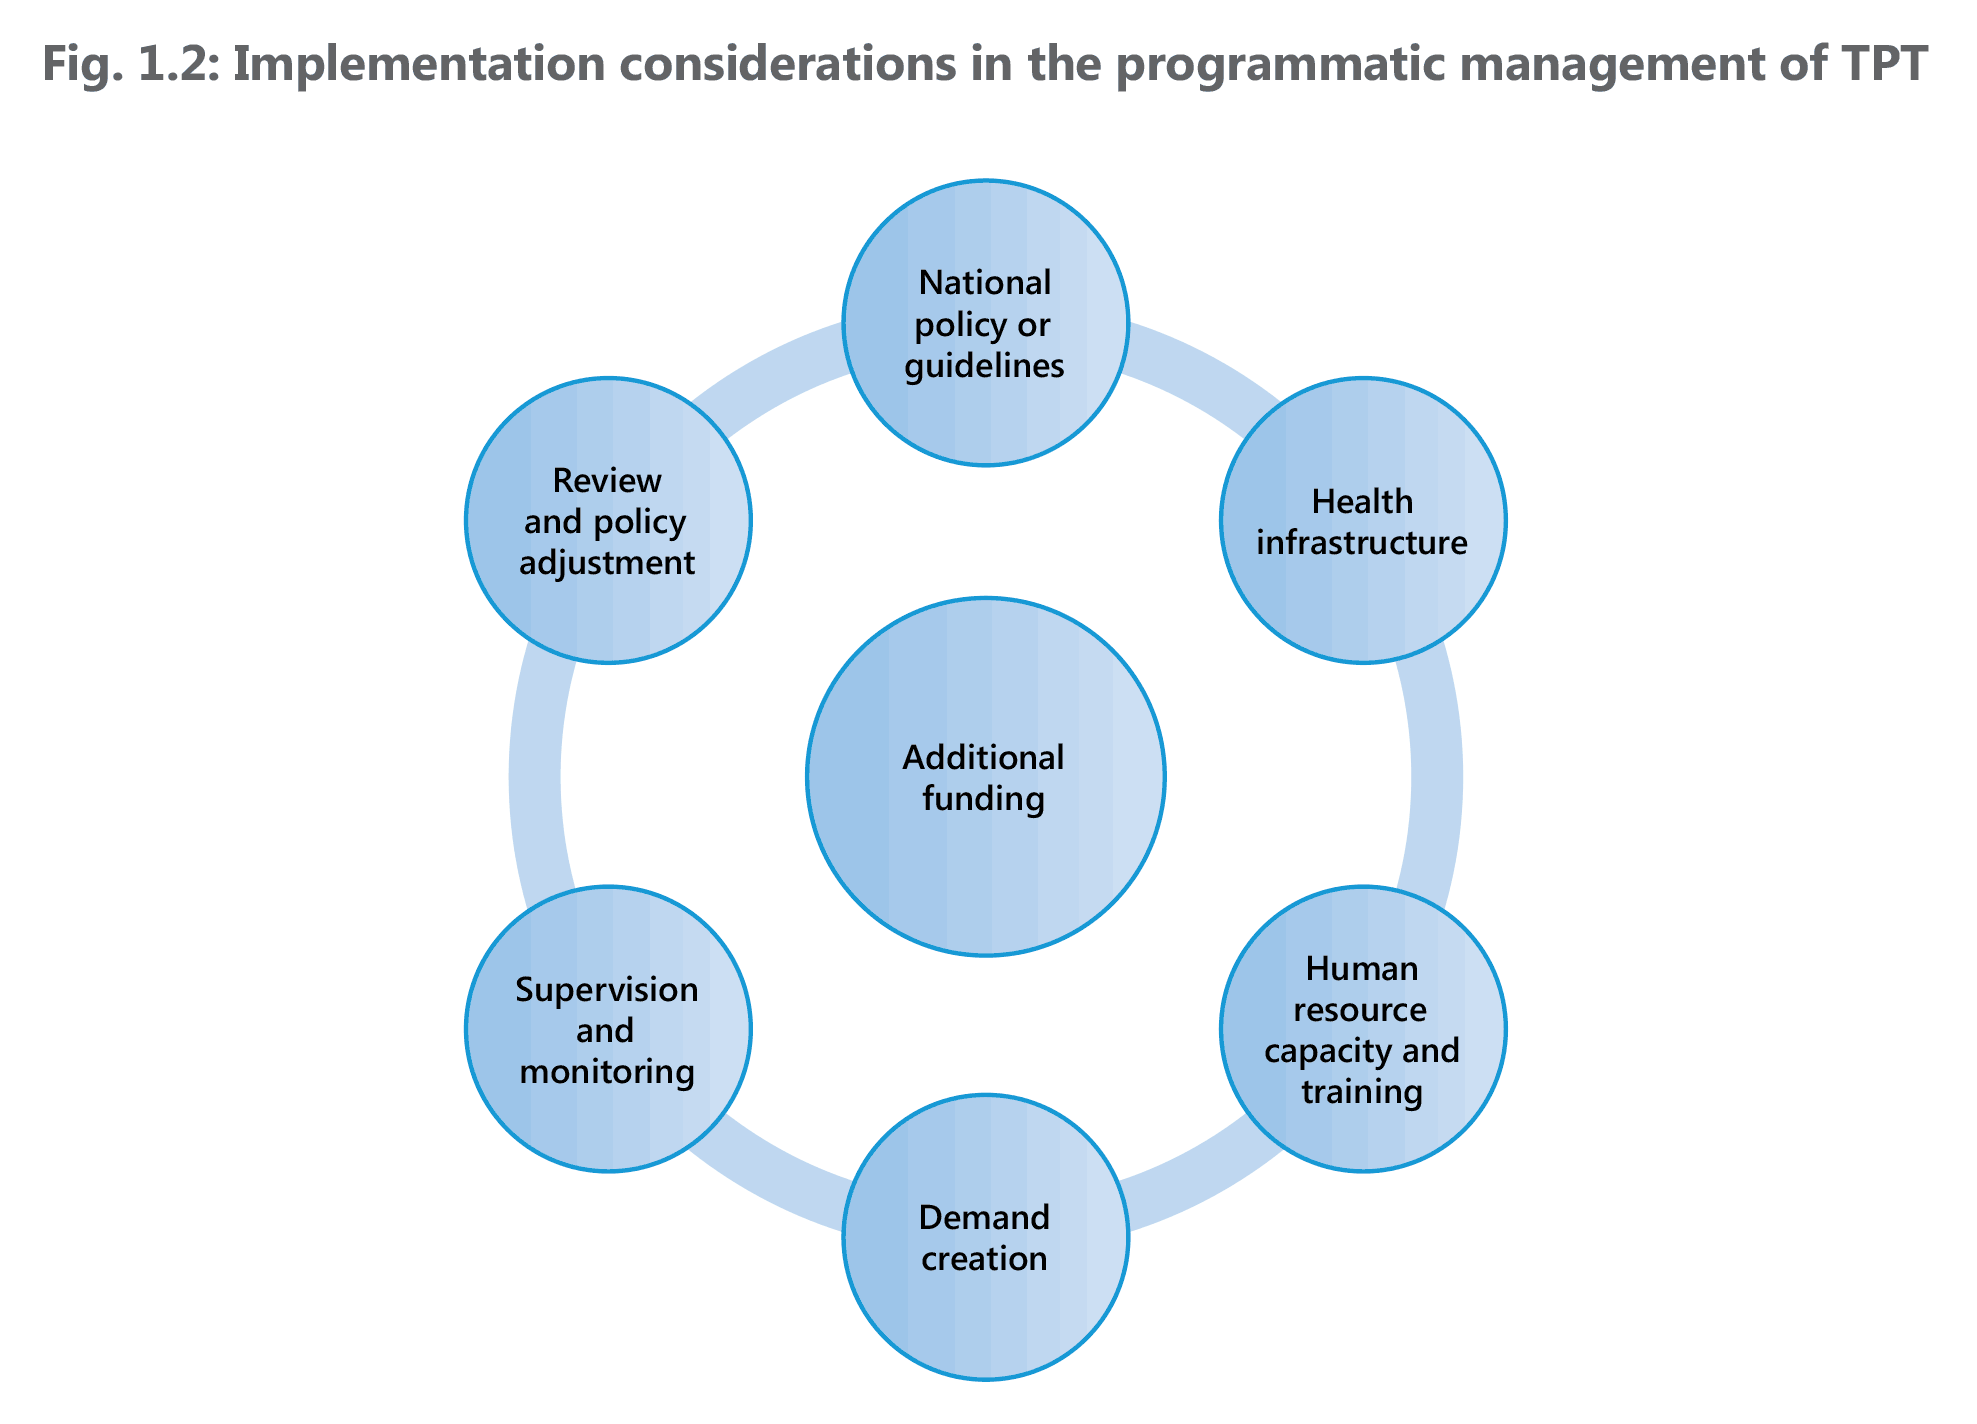 e programmatic management of TPT